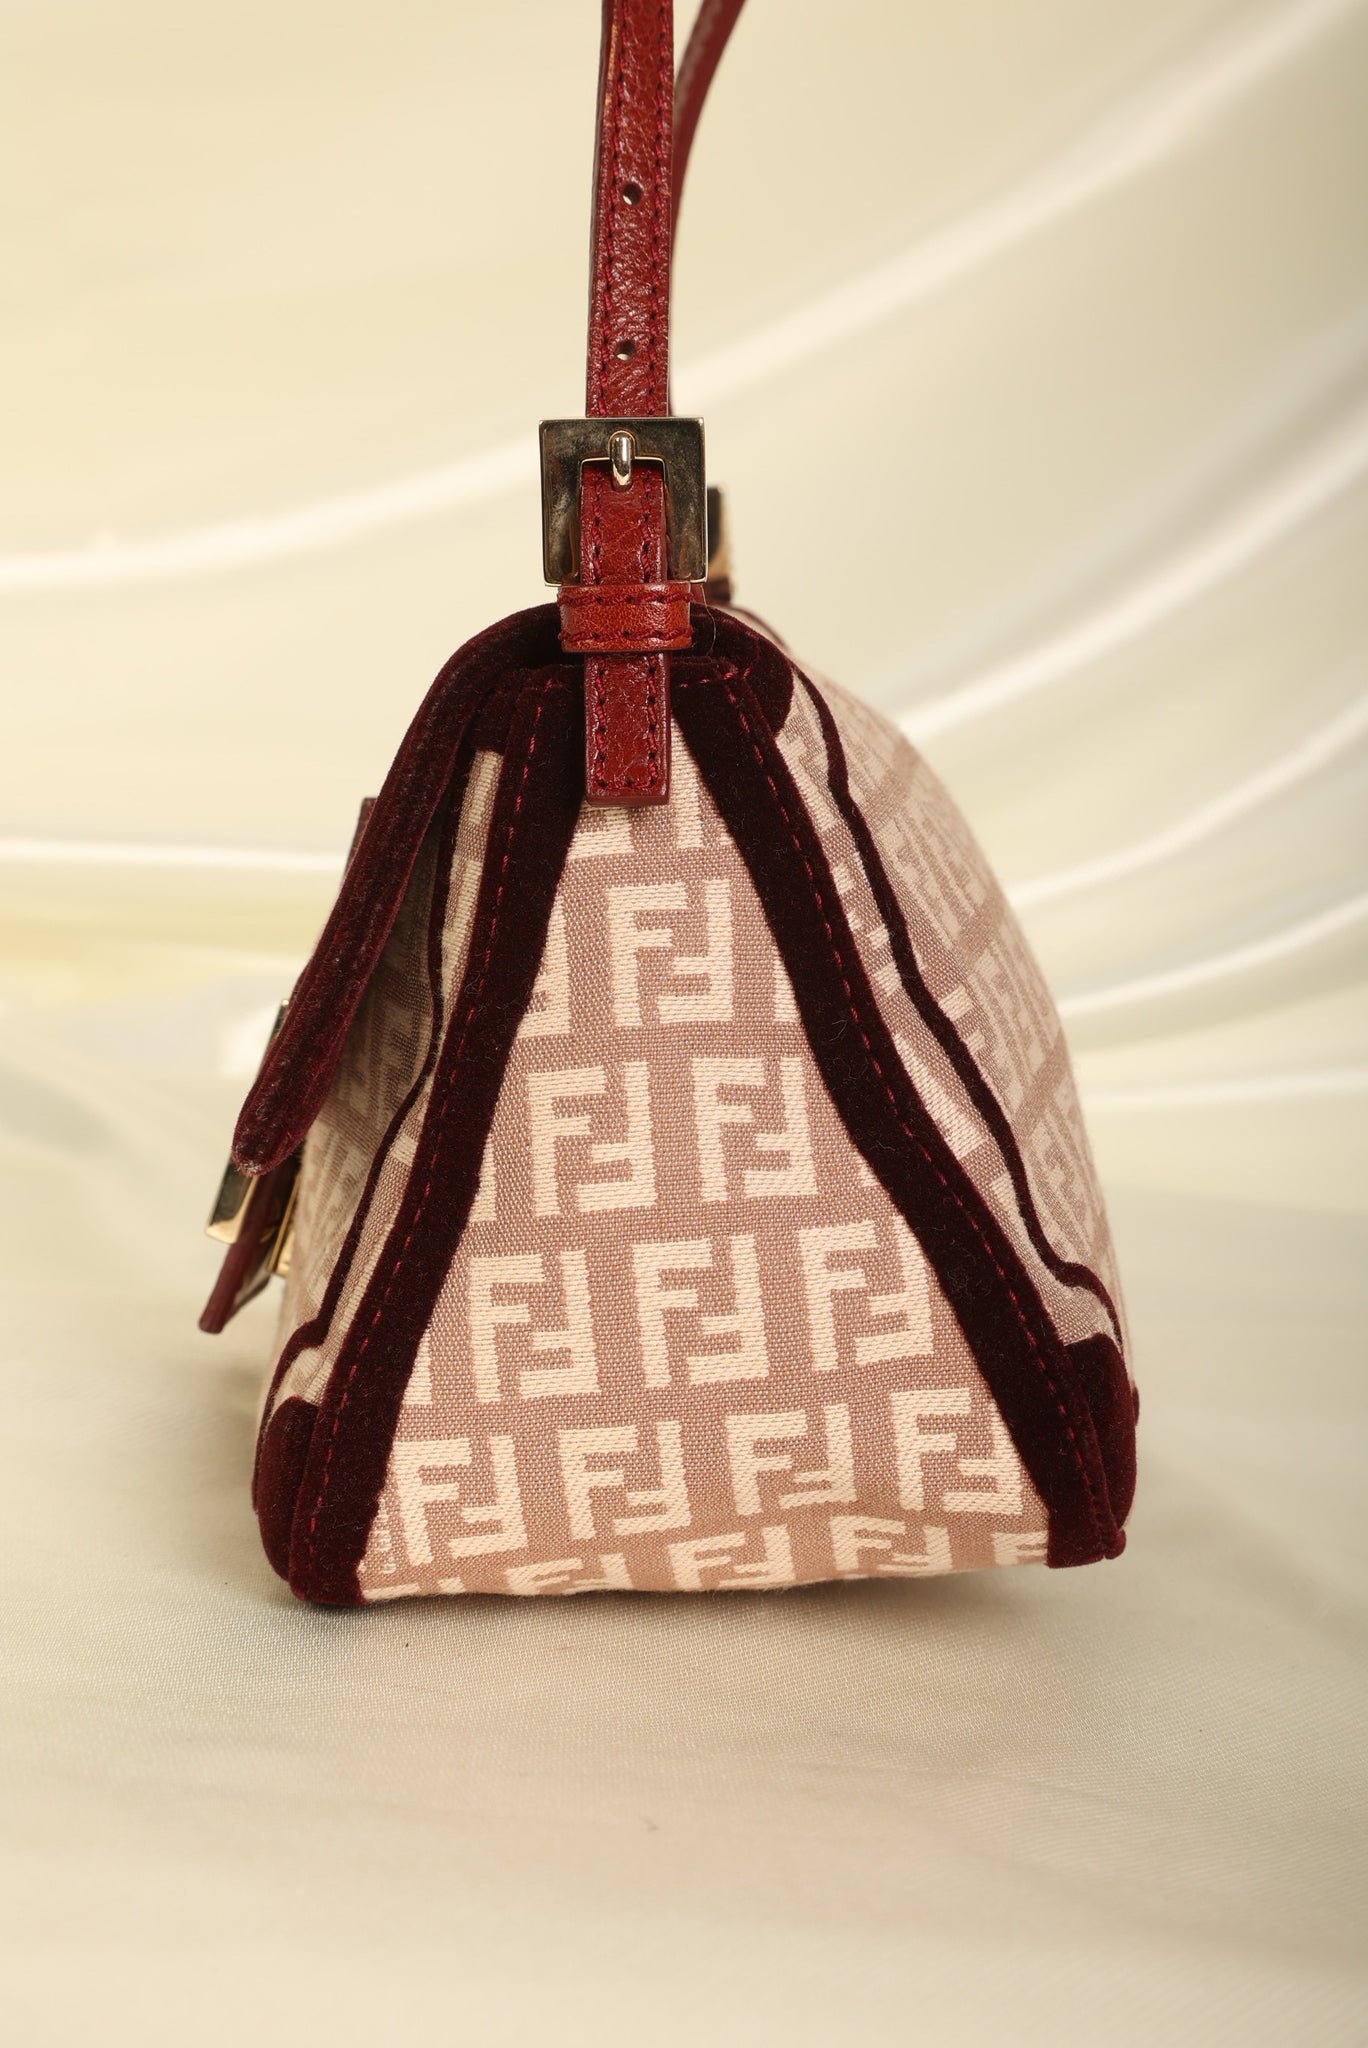 Fendi, Bags, Rare Vintage Fendi Red Mini Shoulder Bag